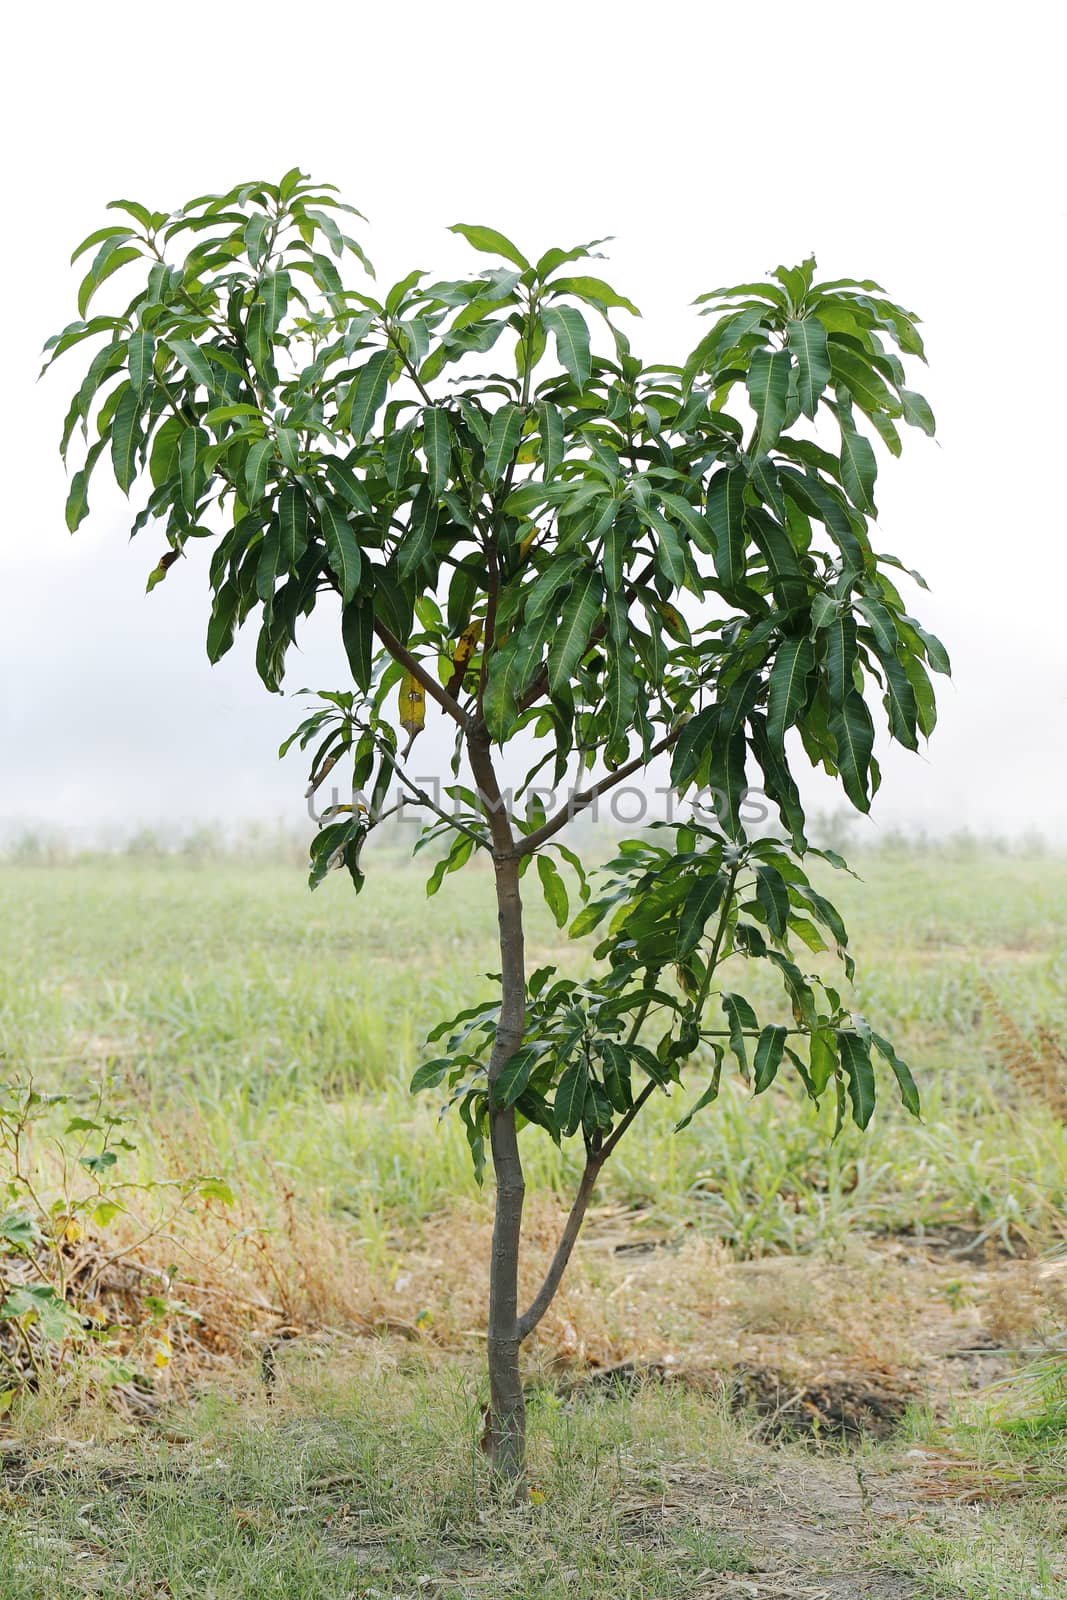 Small mango tree, Mango seedlings, Mango tree in farm by cgdeaw